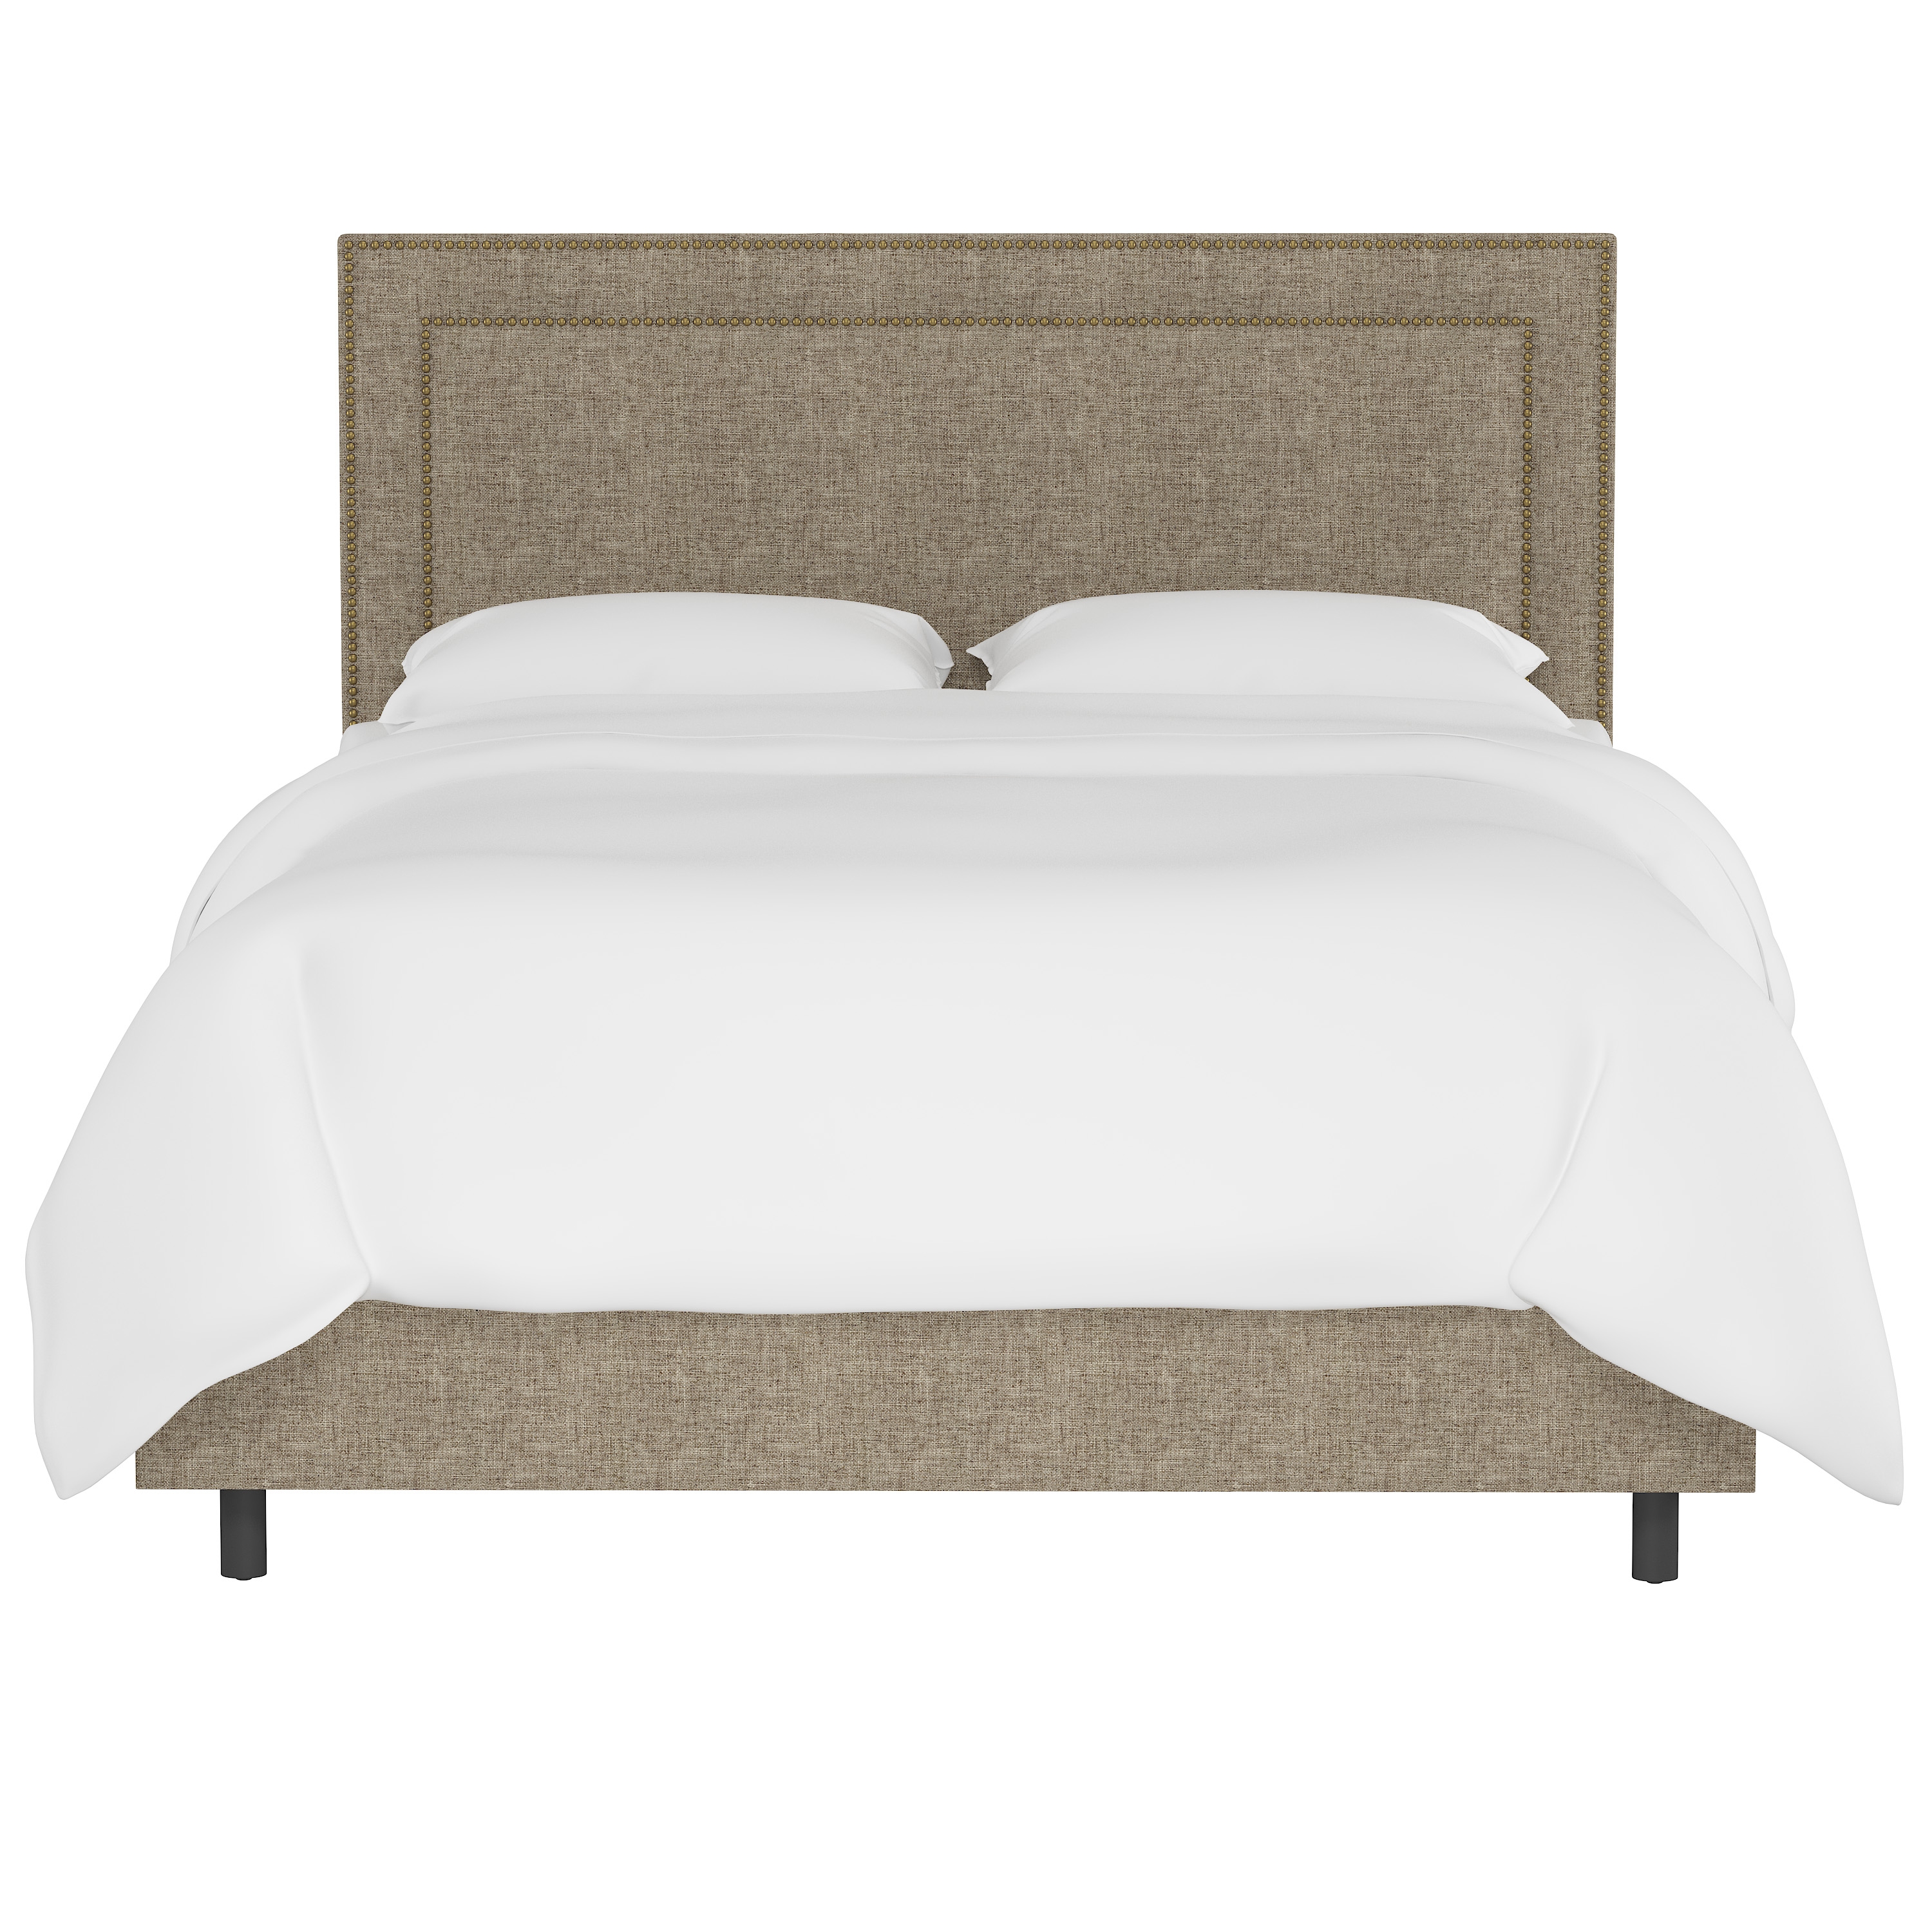 Williams Bed, Full, Linen, Brass Nailheads - Image 1